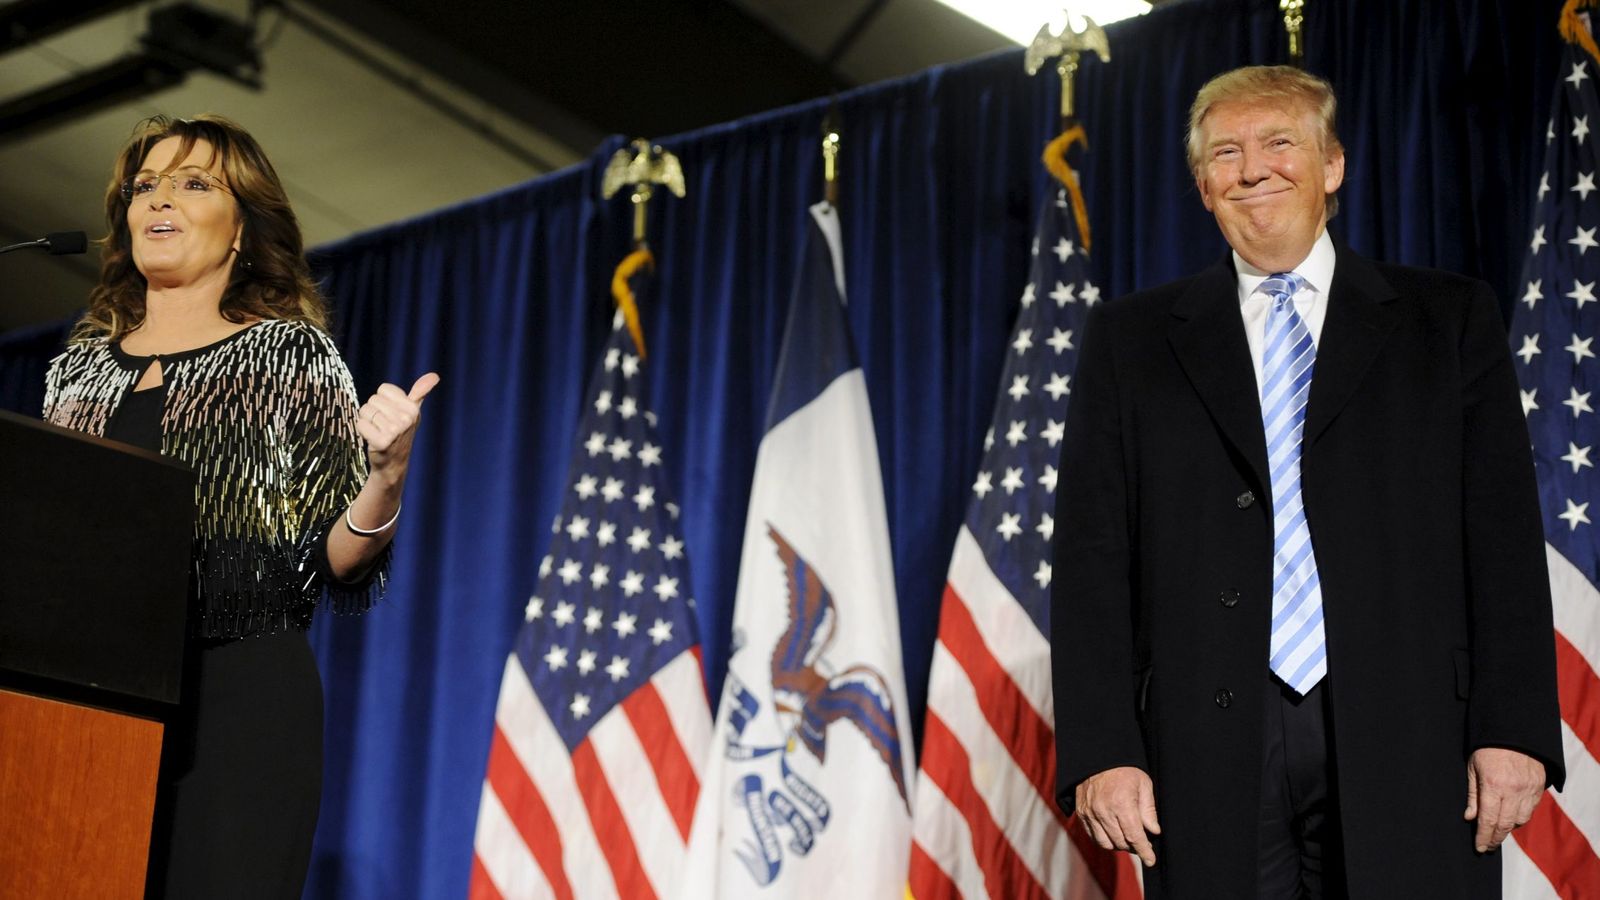 Foto: La exgobernadora de Alaska, Sarah Palin, junto al candidato reublicano Donald Trump en un mitin en Iowa, el 19 de enero de 2016 (Reuters).